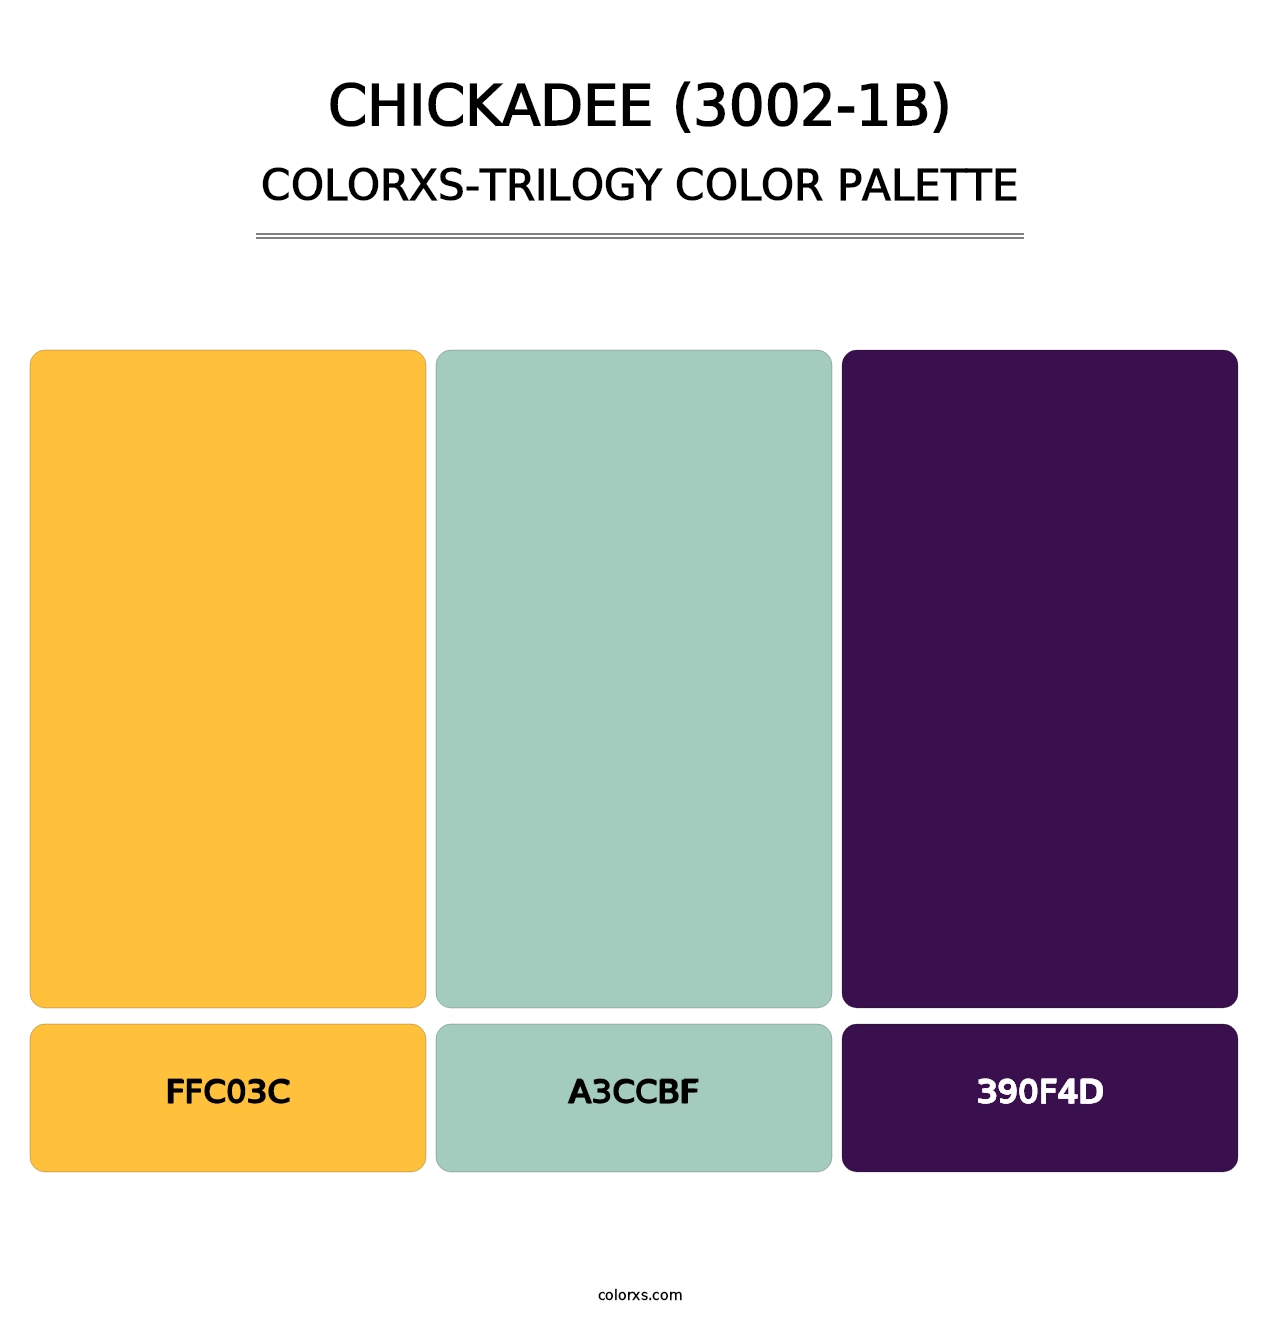 Chickadee (3002-1B) - Colorxs Trilogy Palette